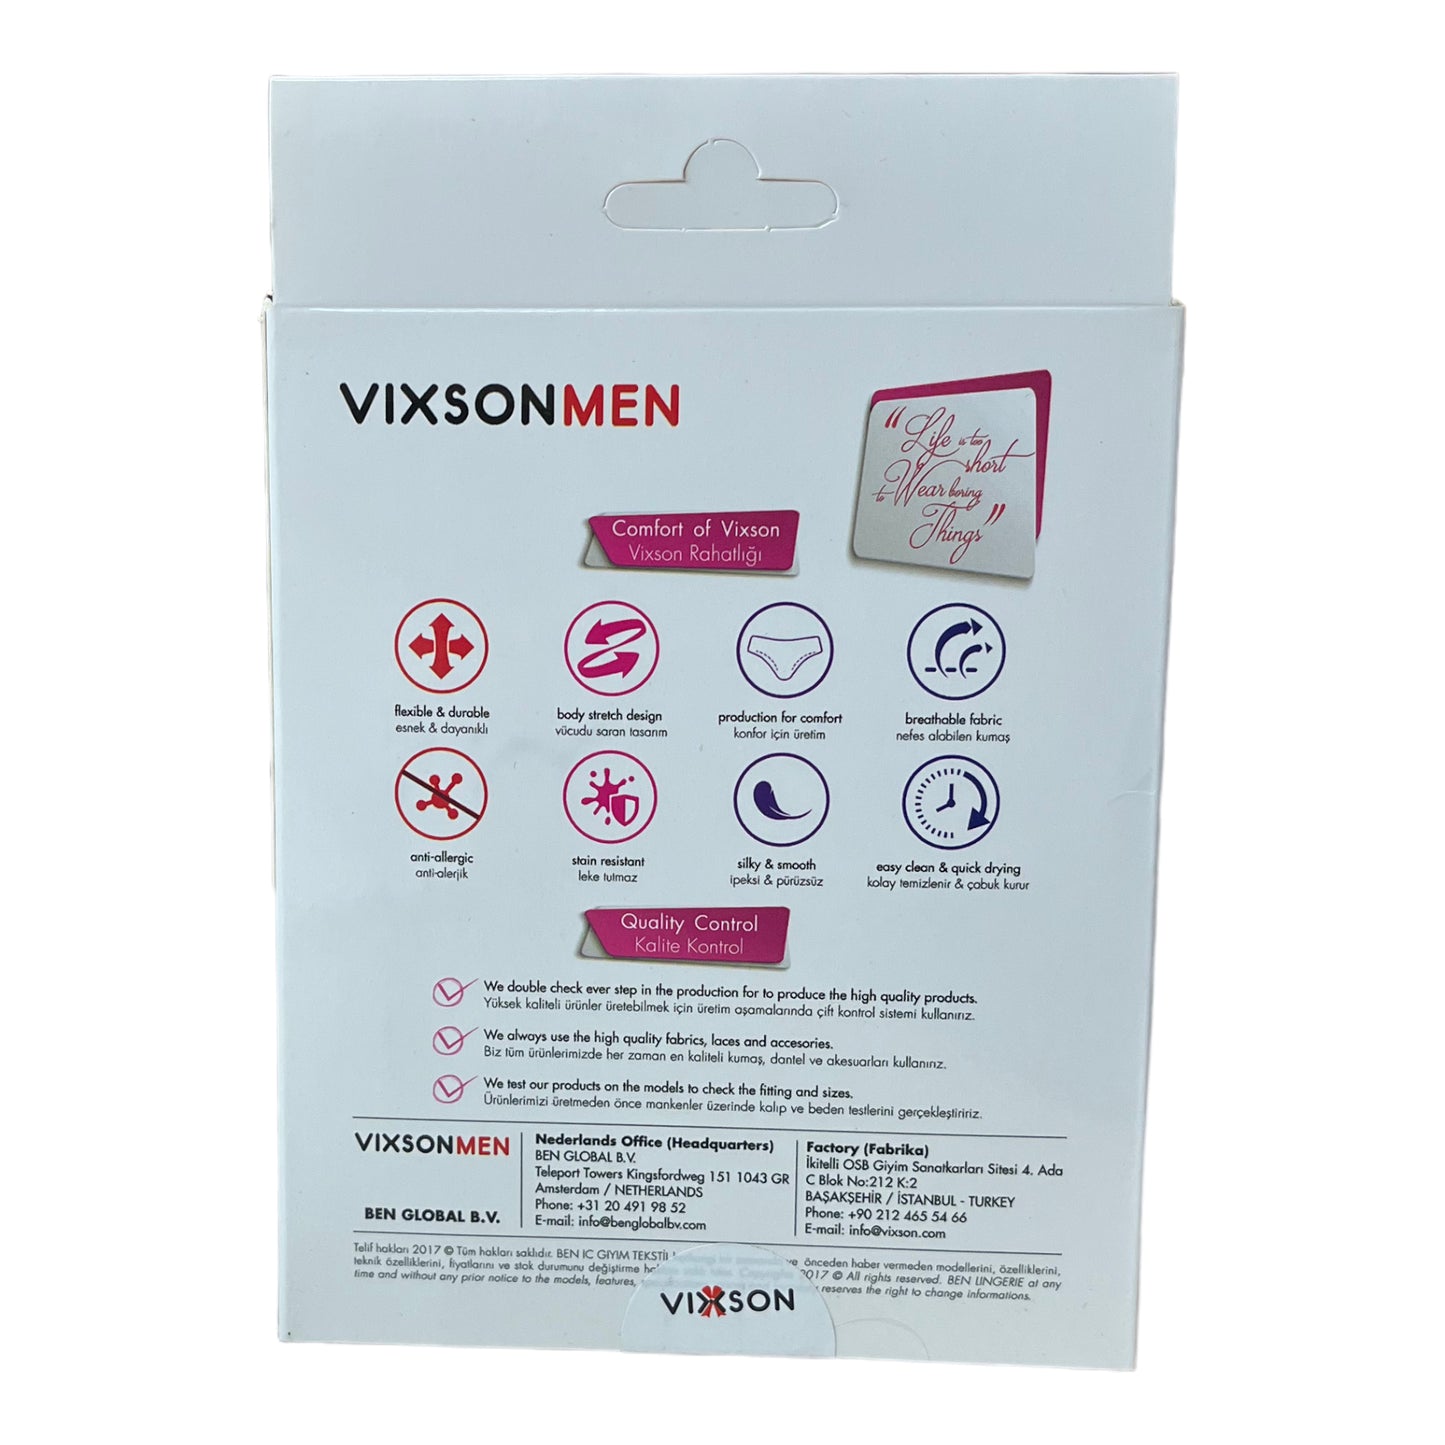 Vixson - VN-5022 - Male Lingerie - One Size S-L - Gold